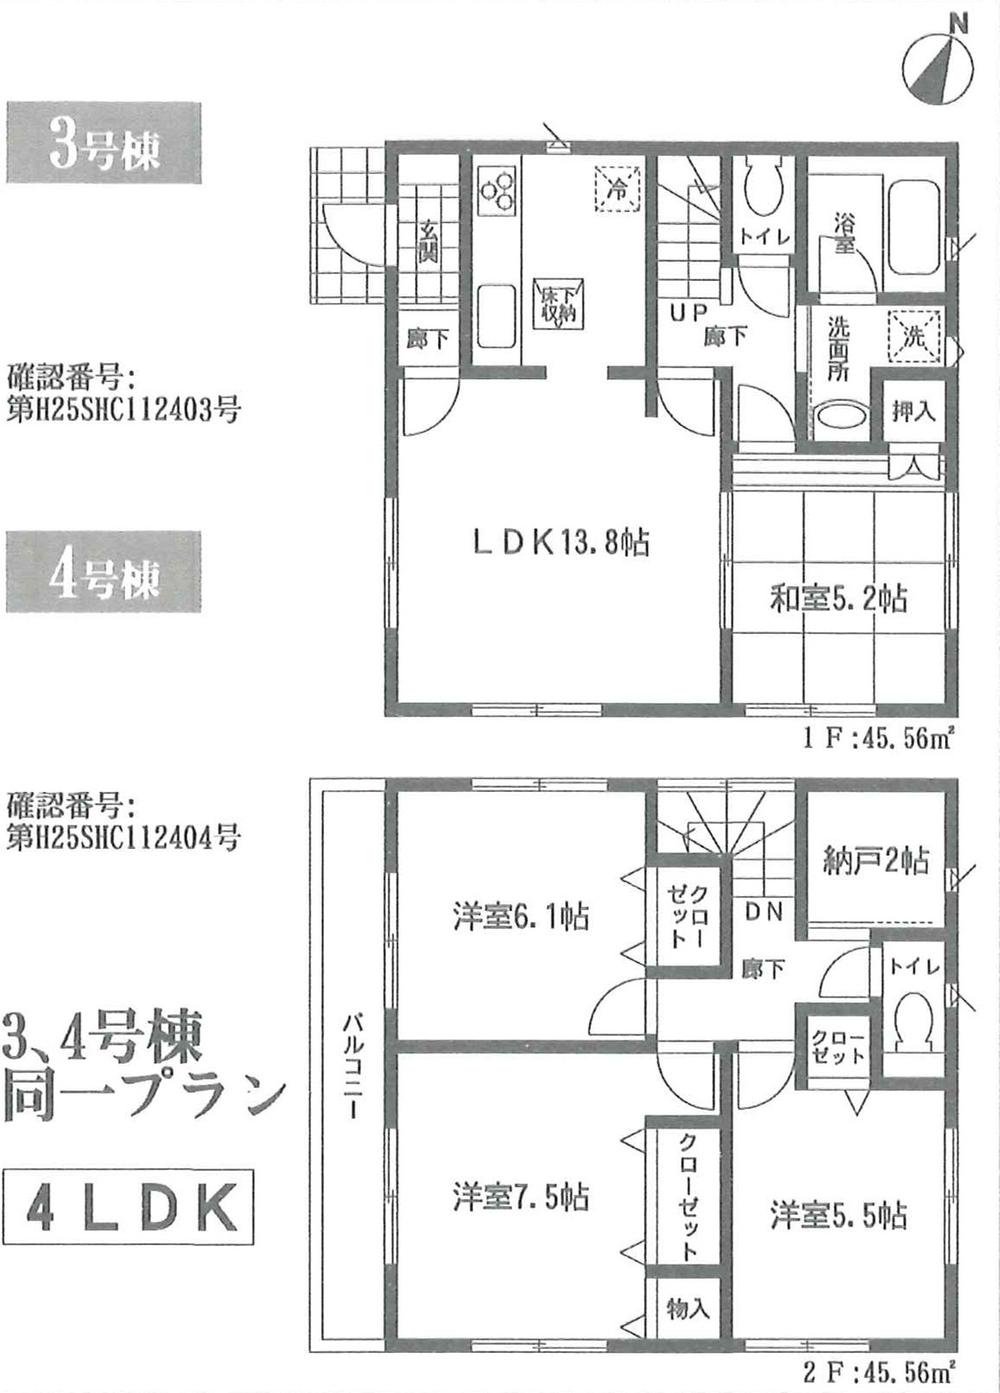 Floor plan. (3 Building), Price 17 million yen, 4LDK, Land area 104.52 sq m , Building area 91.12 sq m